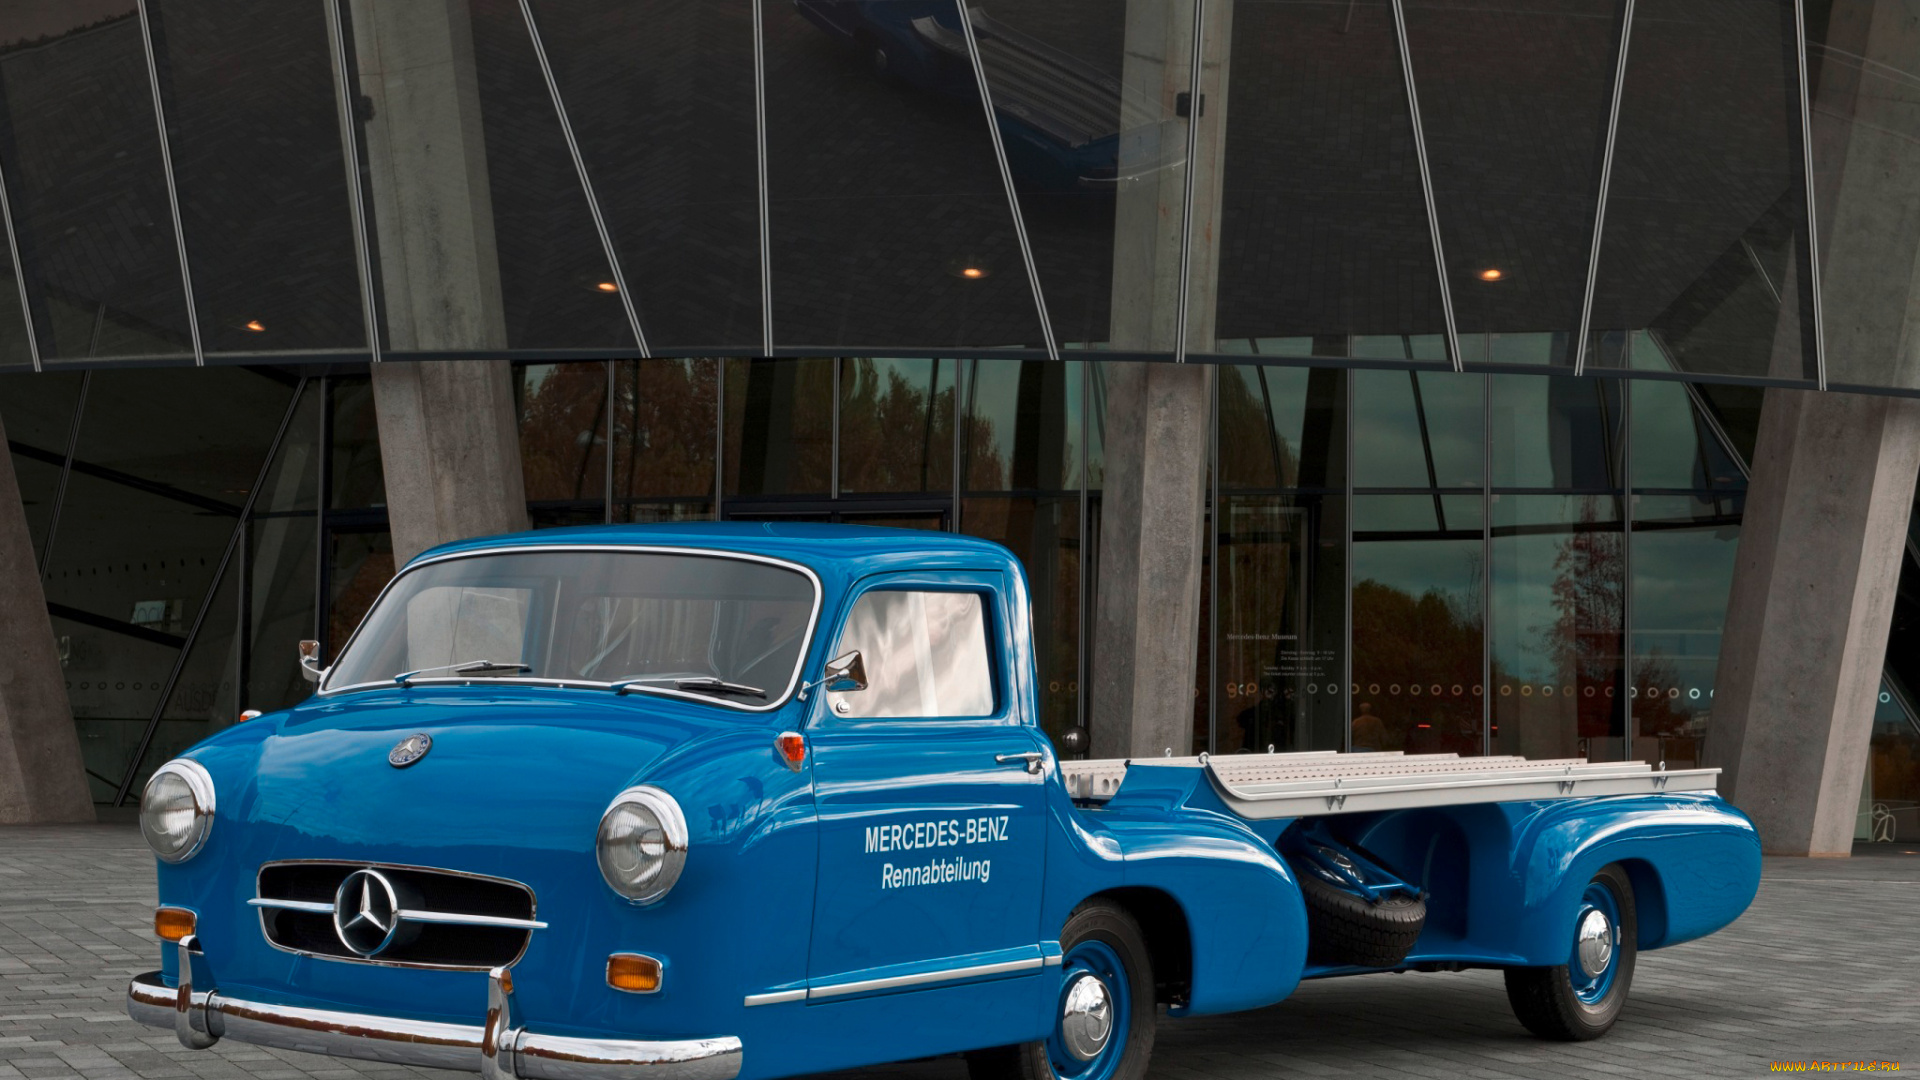 mercedes-benz, blue, wonder, transporter, concept, 1954, автомобили, mercedes-benz, blue, 1954, transporter, wonder, concept